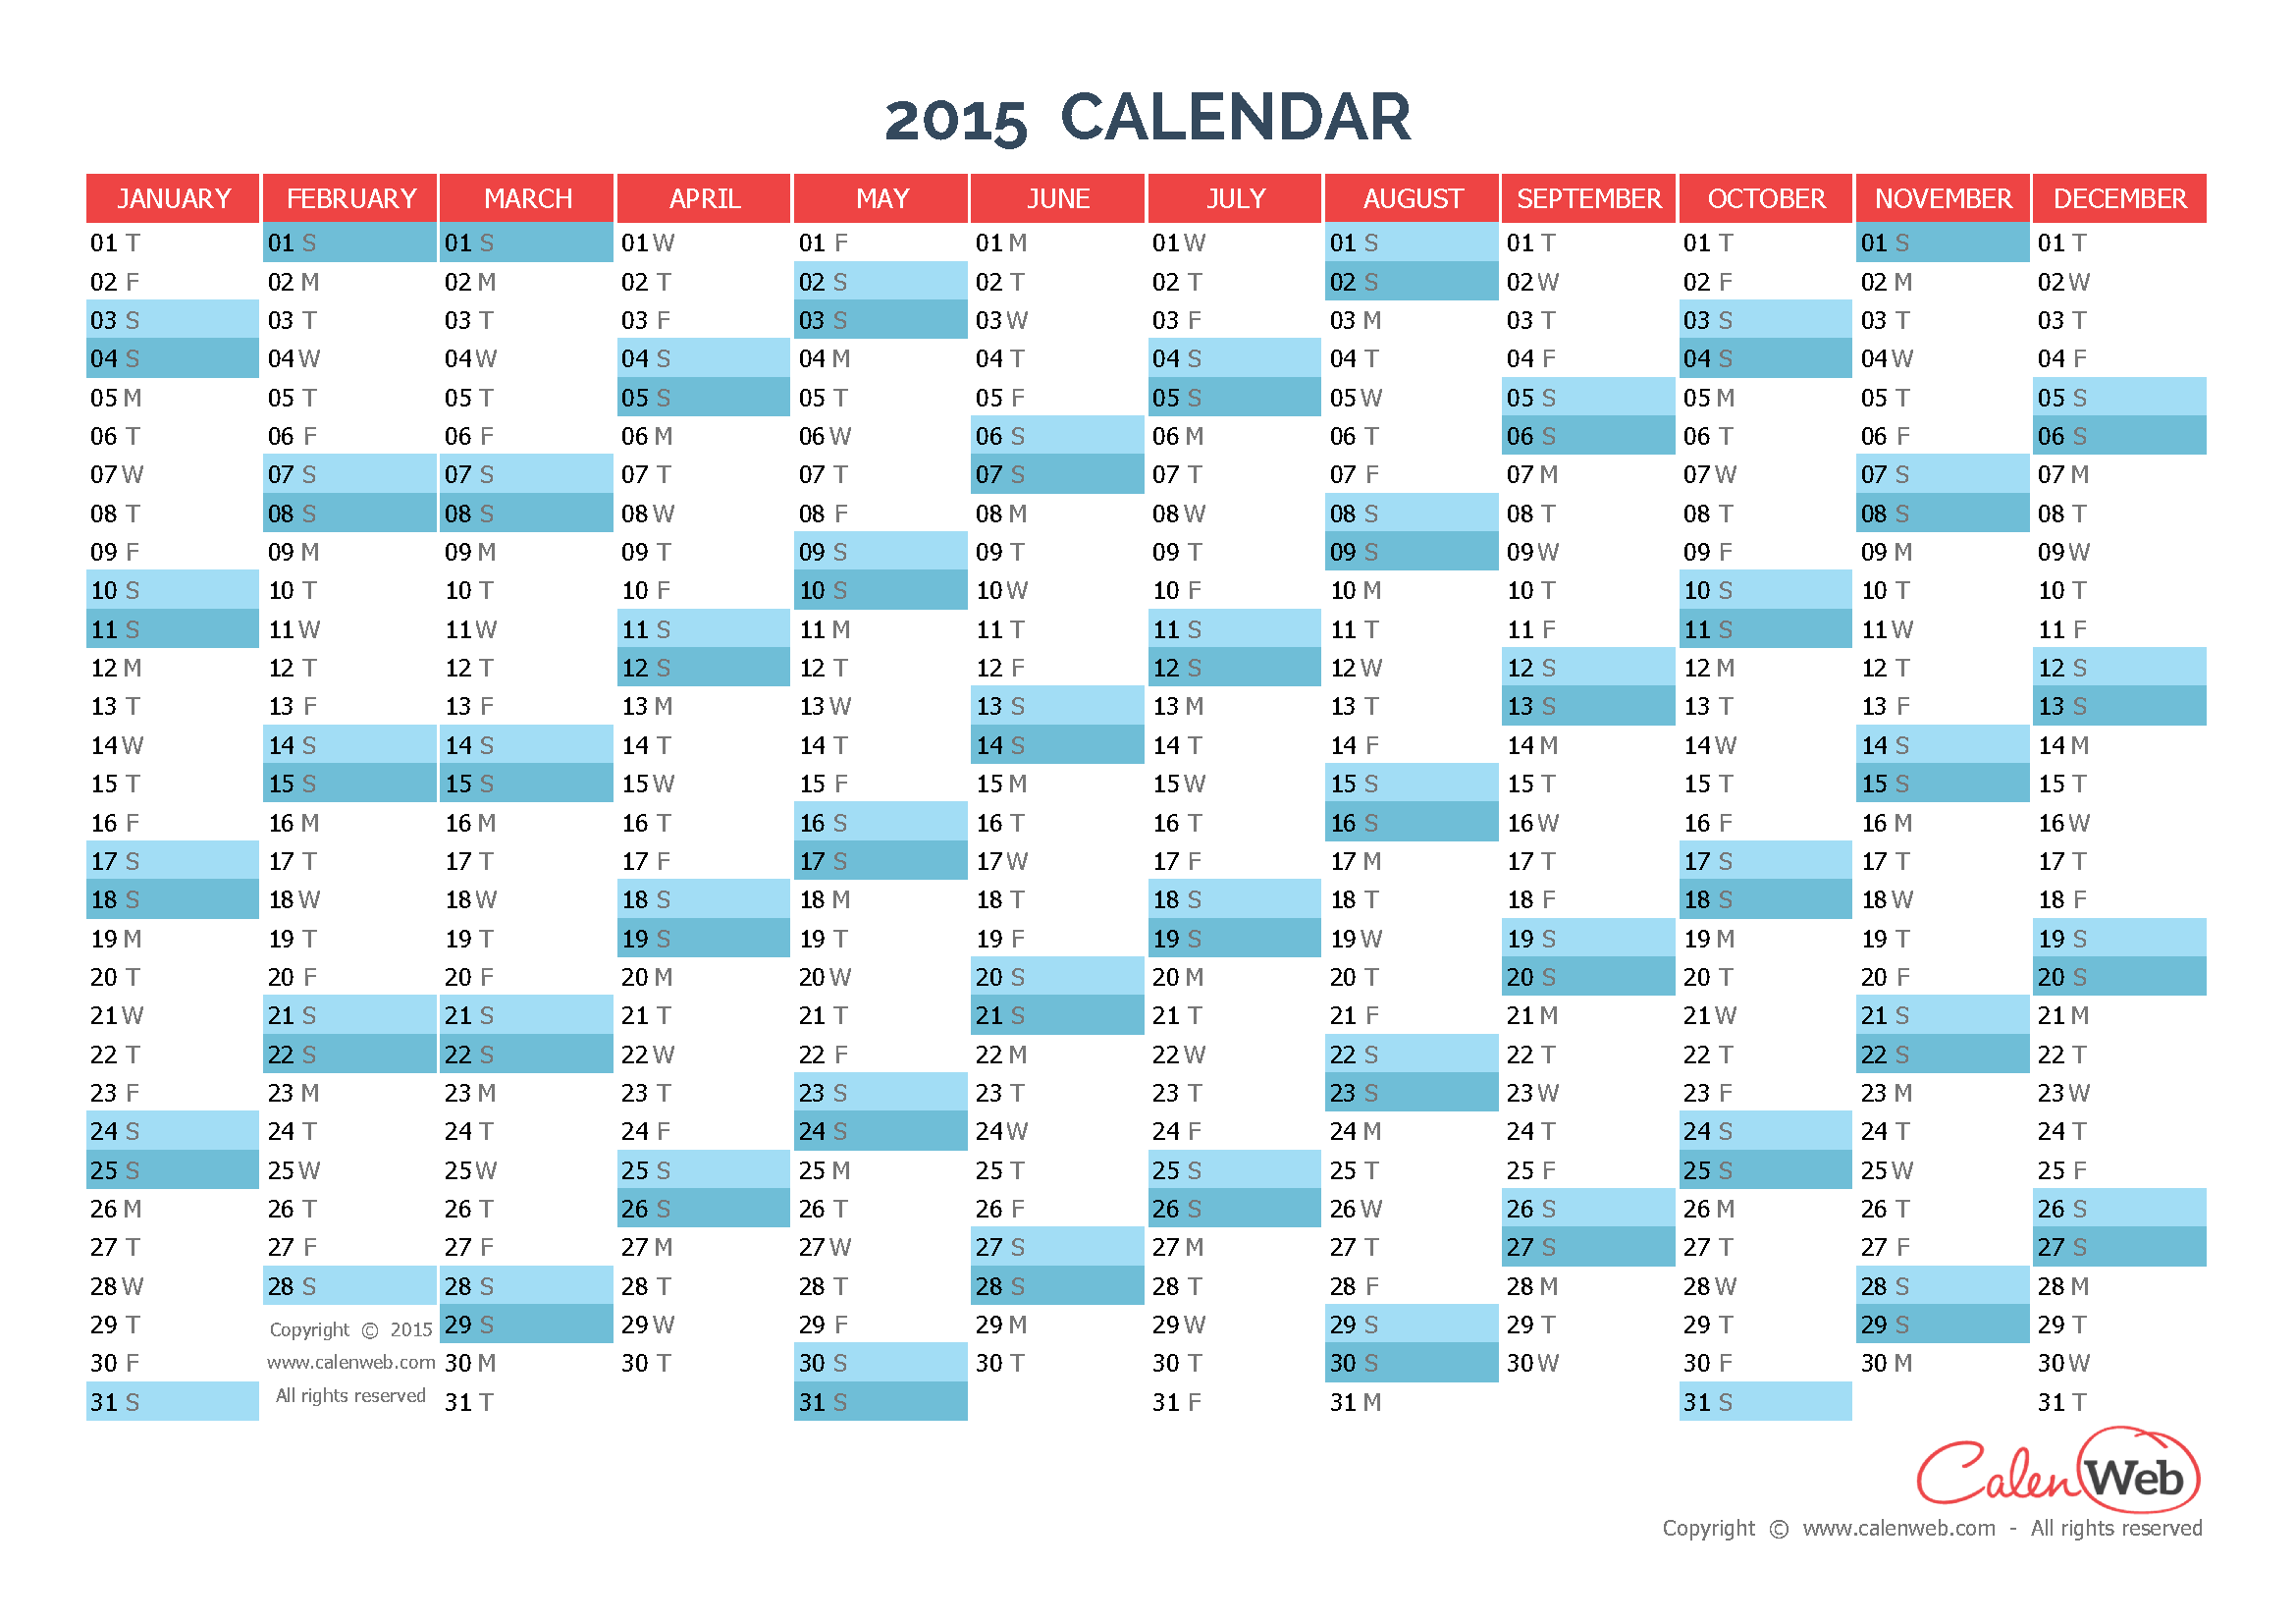 Yearly calendar â€“ Year 2015